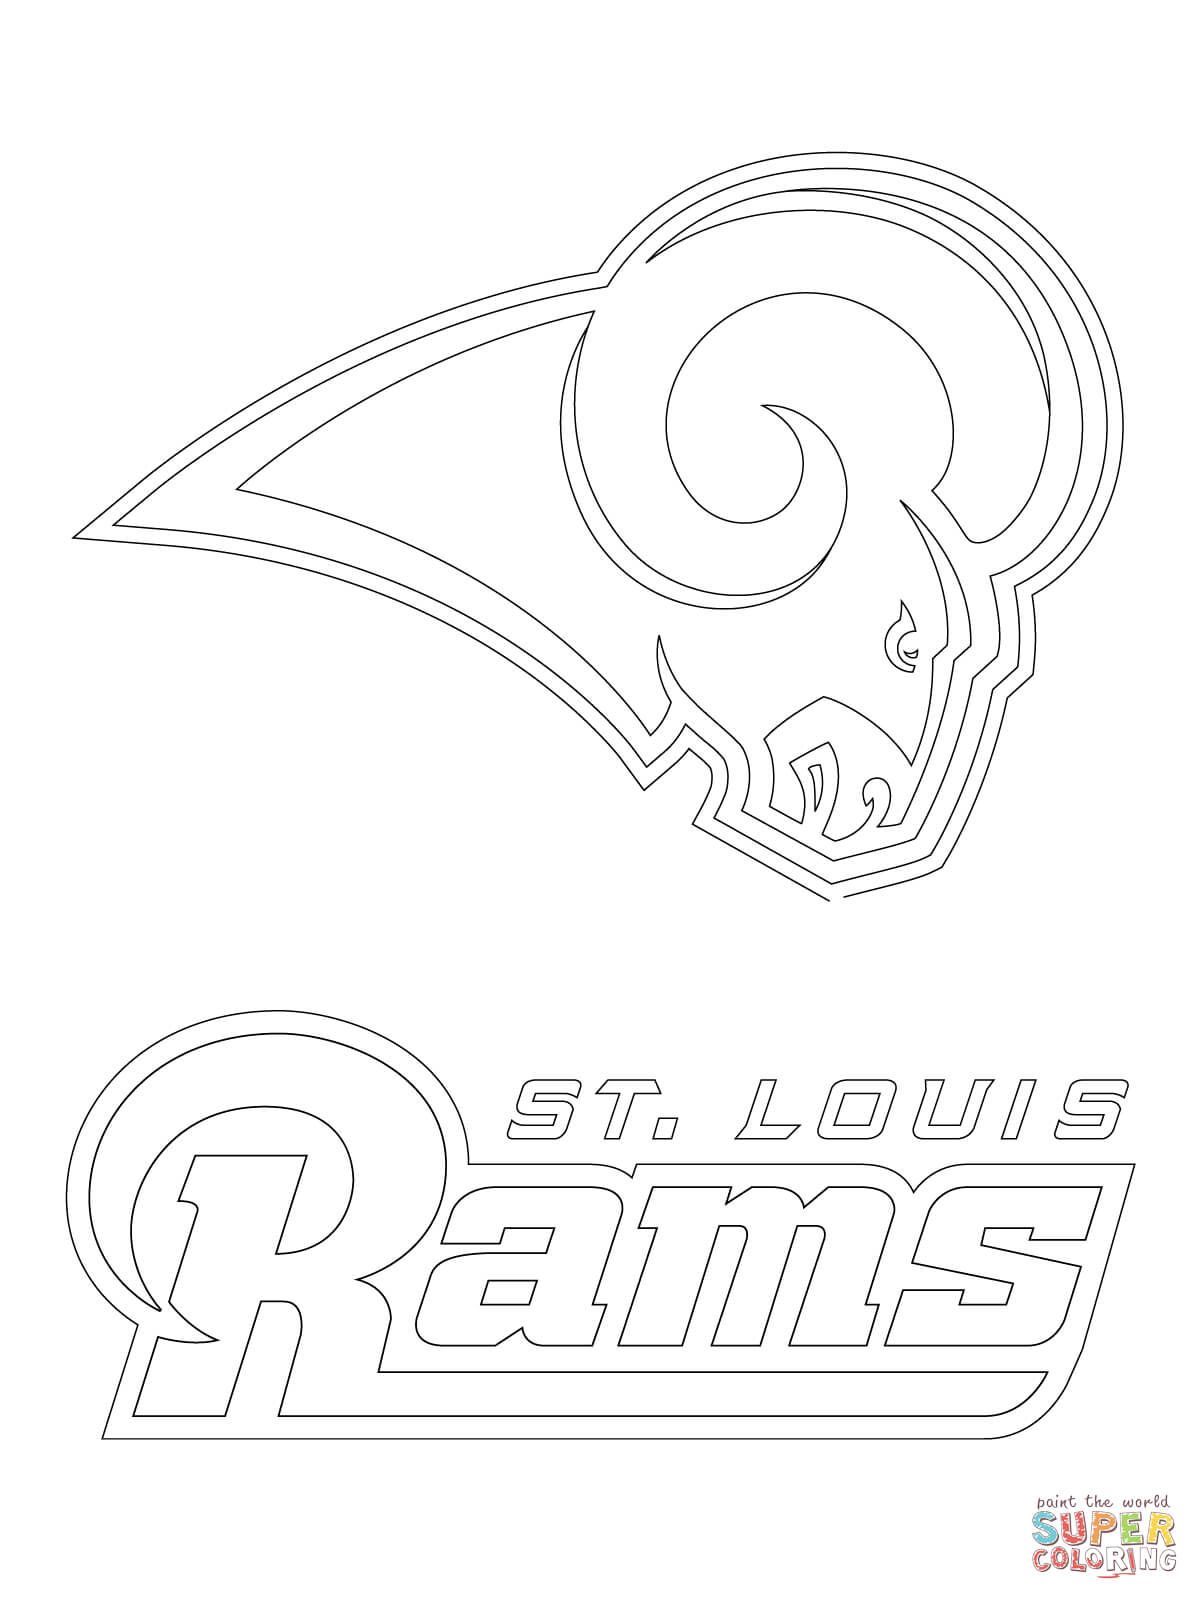 St. Louis Rams Logo coloring page | Free Printable Coloring Pages |  Football coloring pages, Coloring pages, Free printable coloring pages